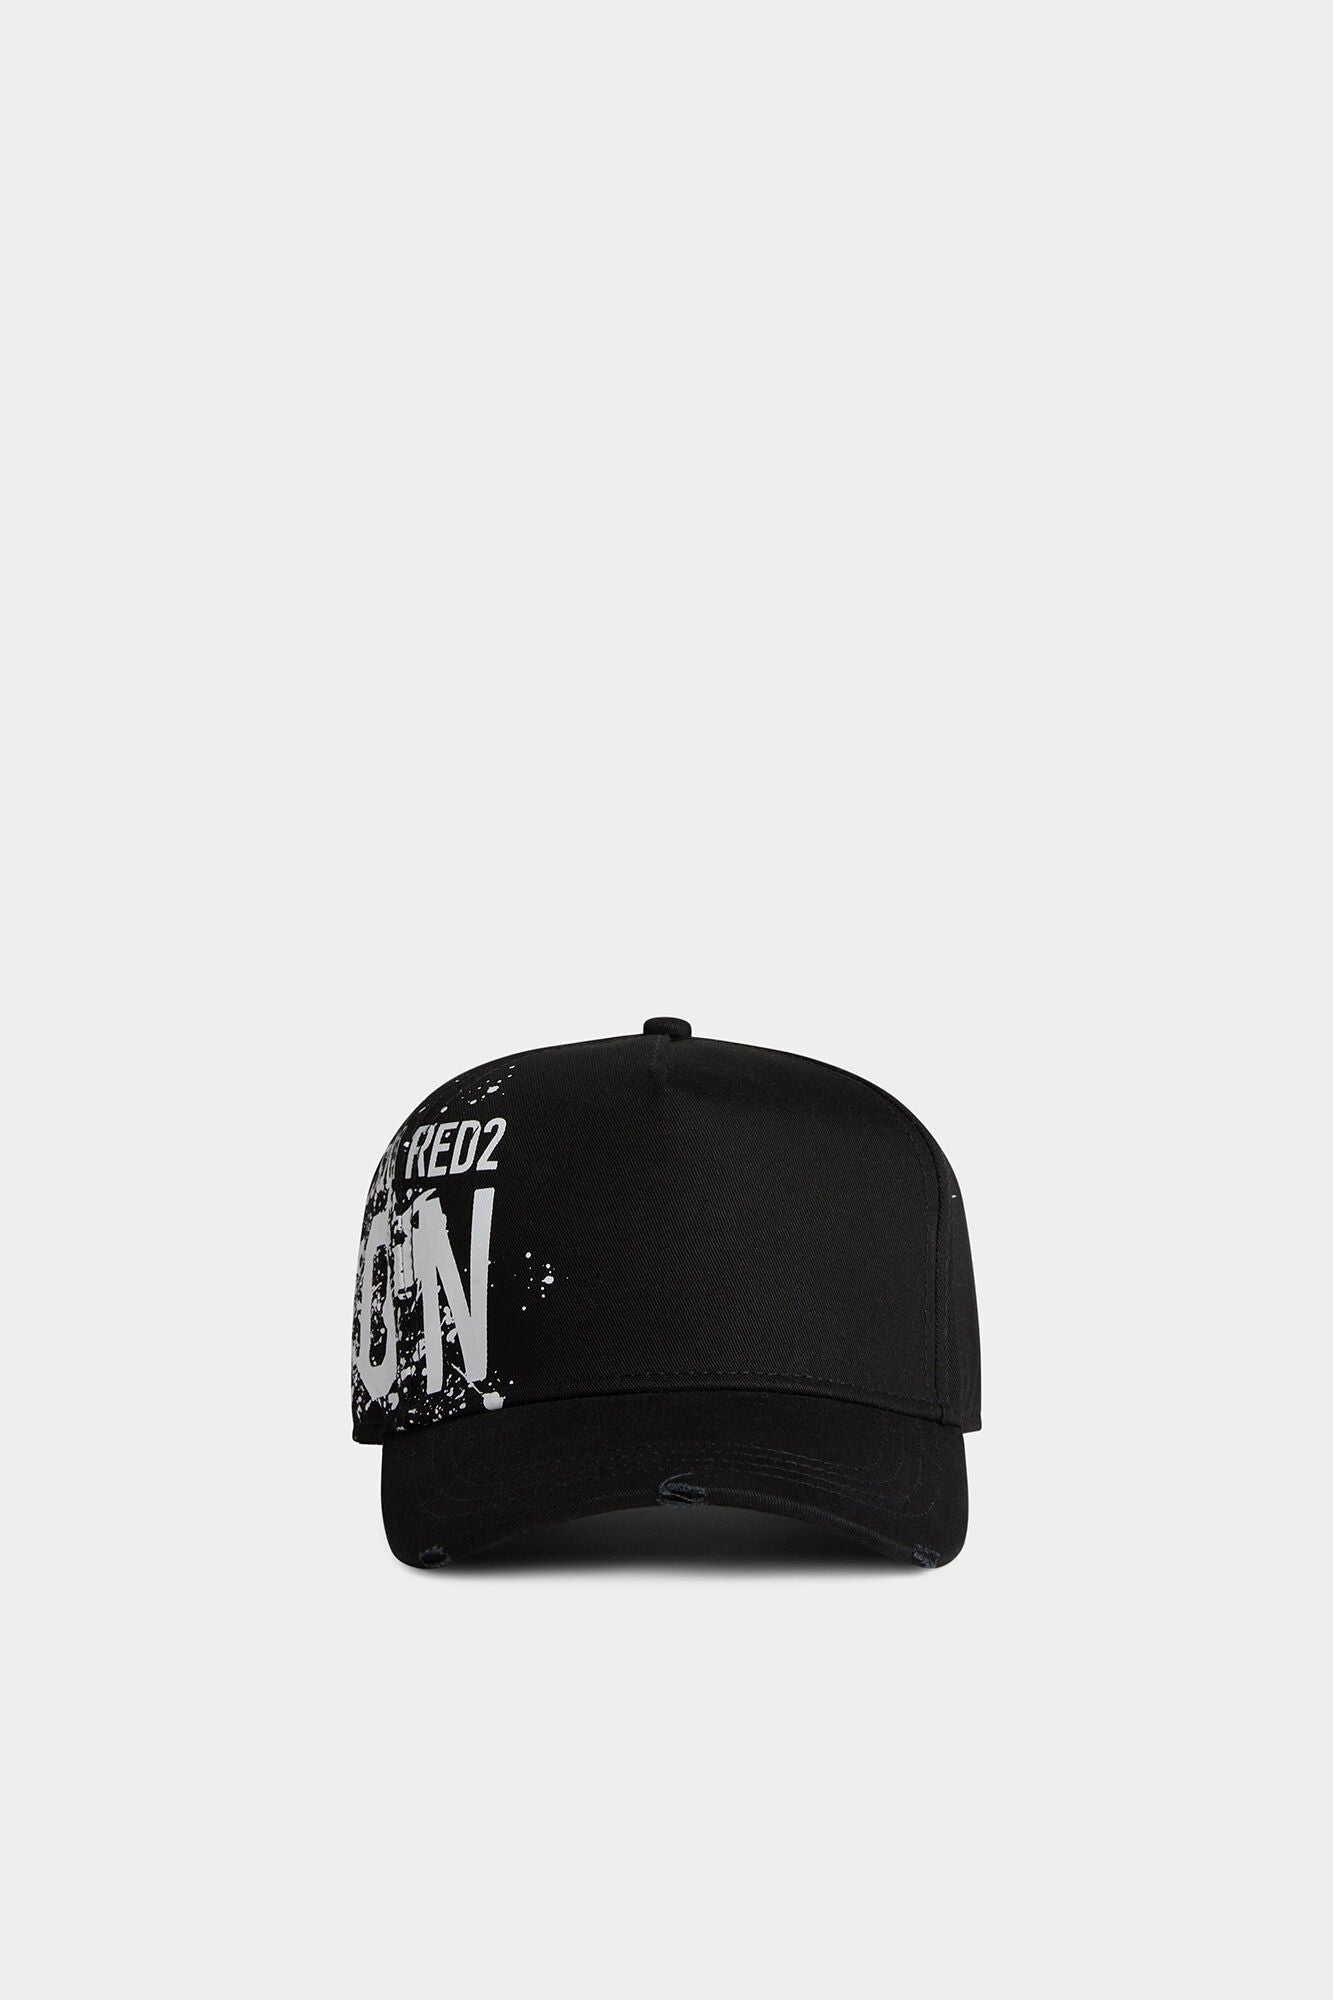 DSQUARED2 帽子– YC Group|Luxury Fashion